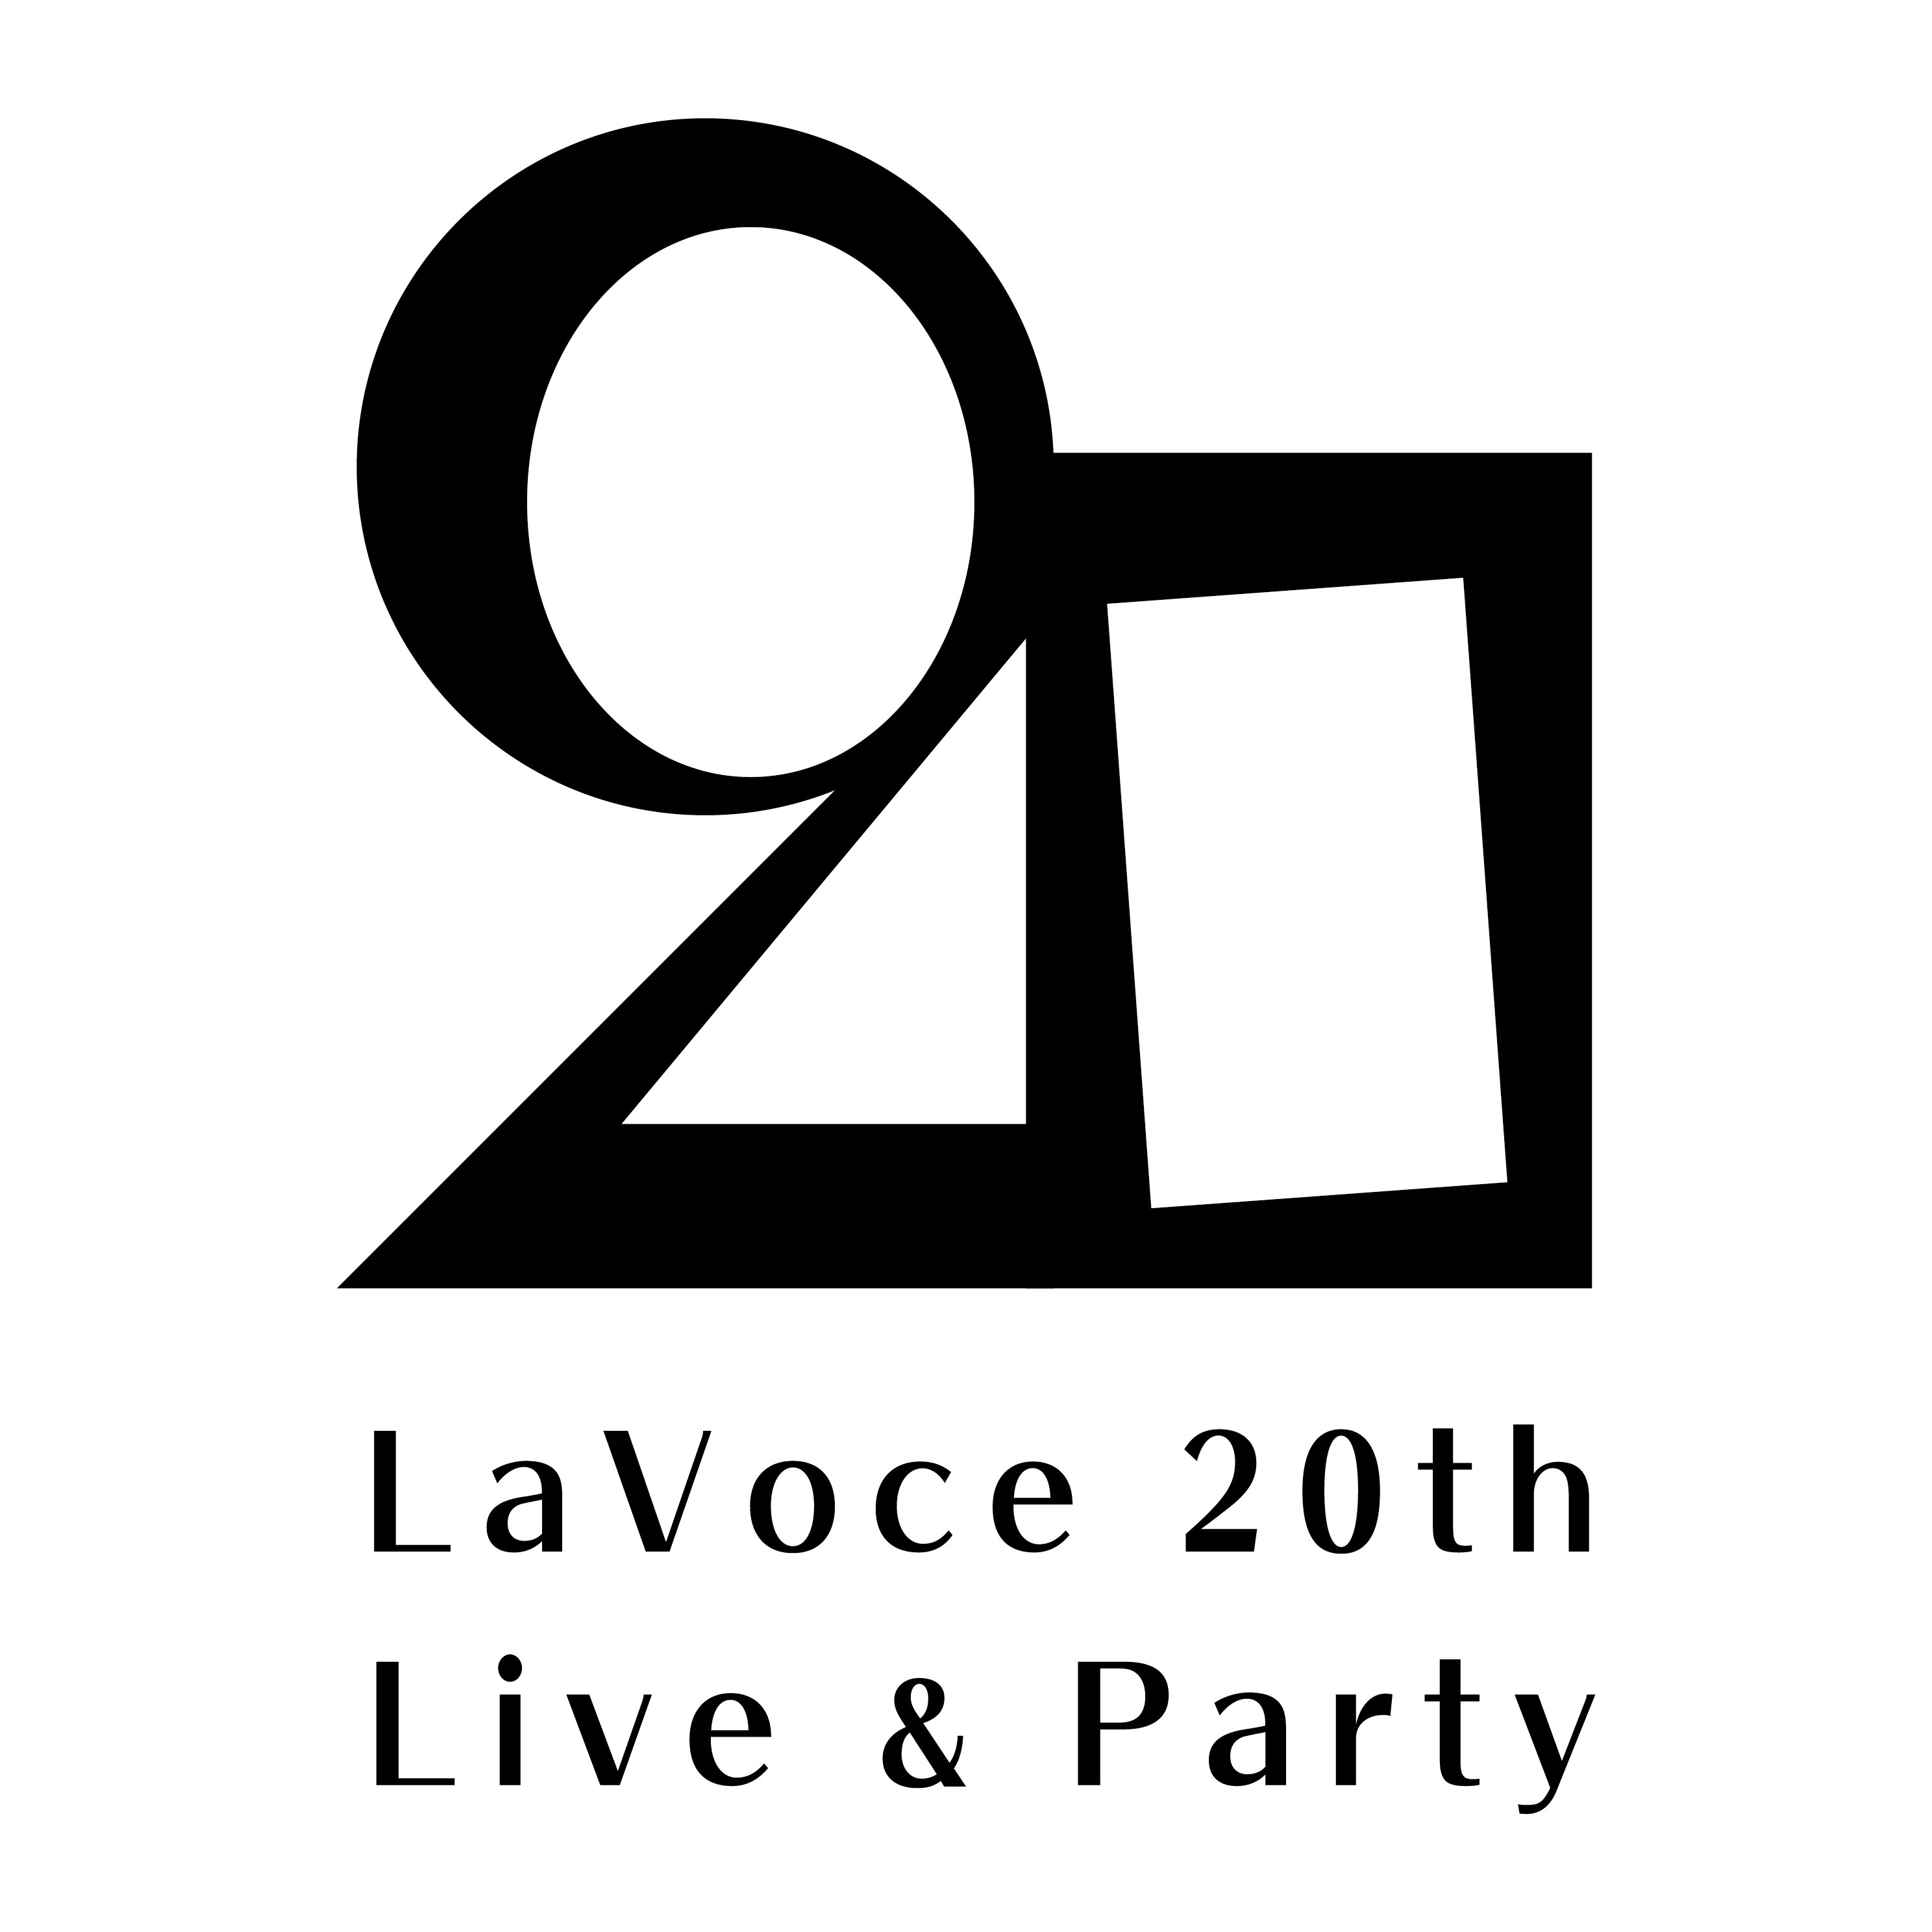 LaVoce 20th Logo